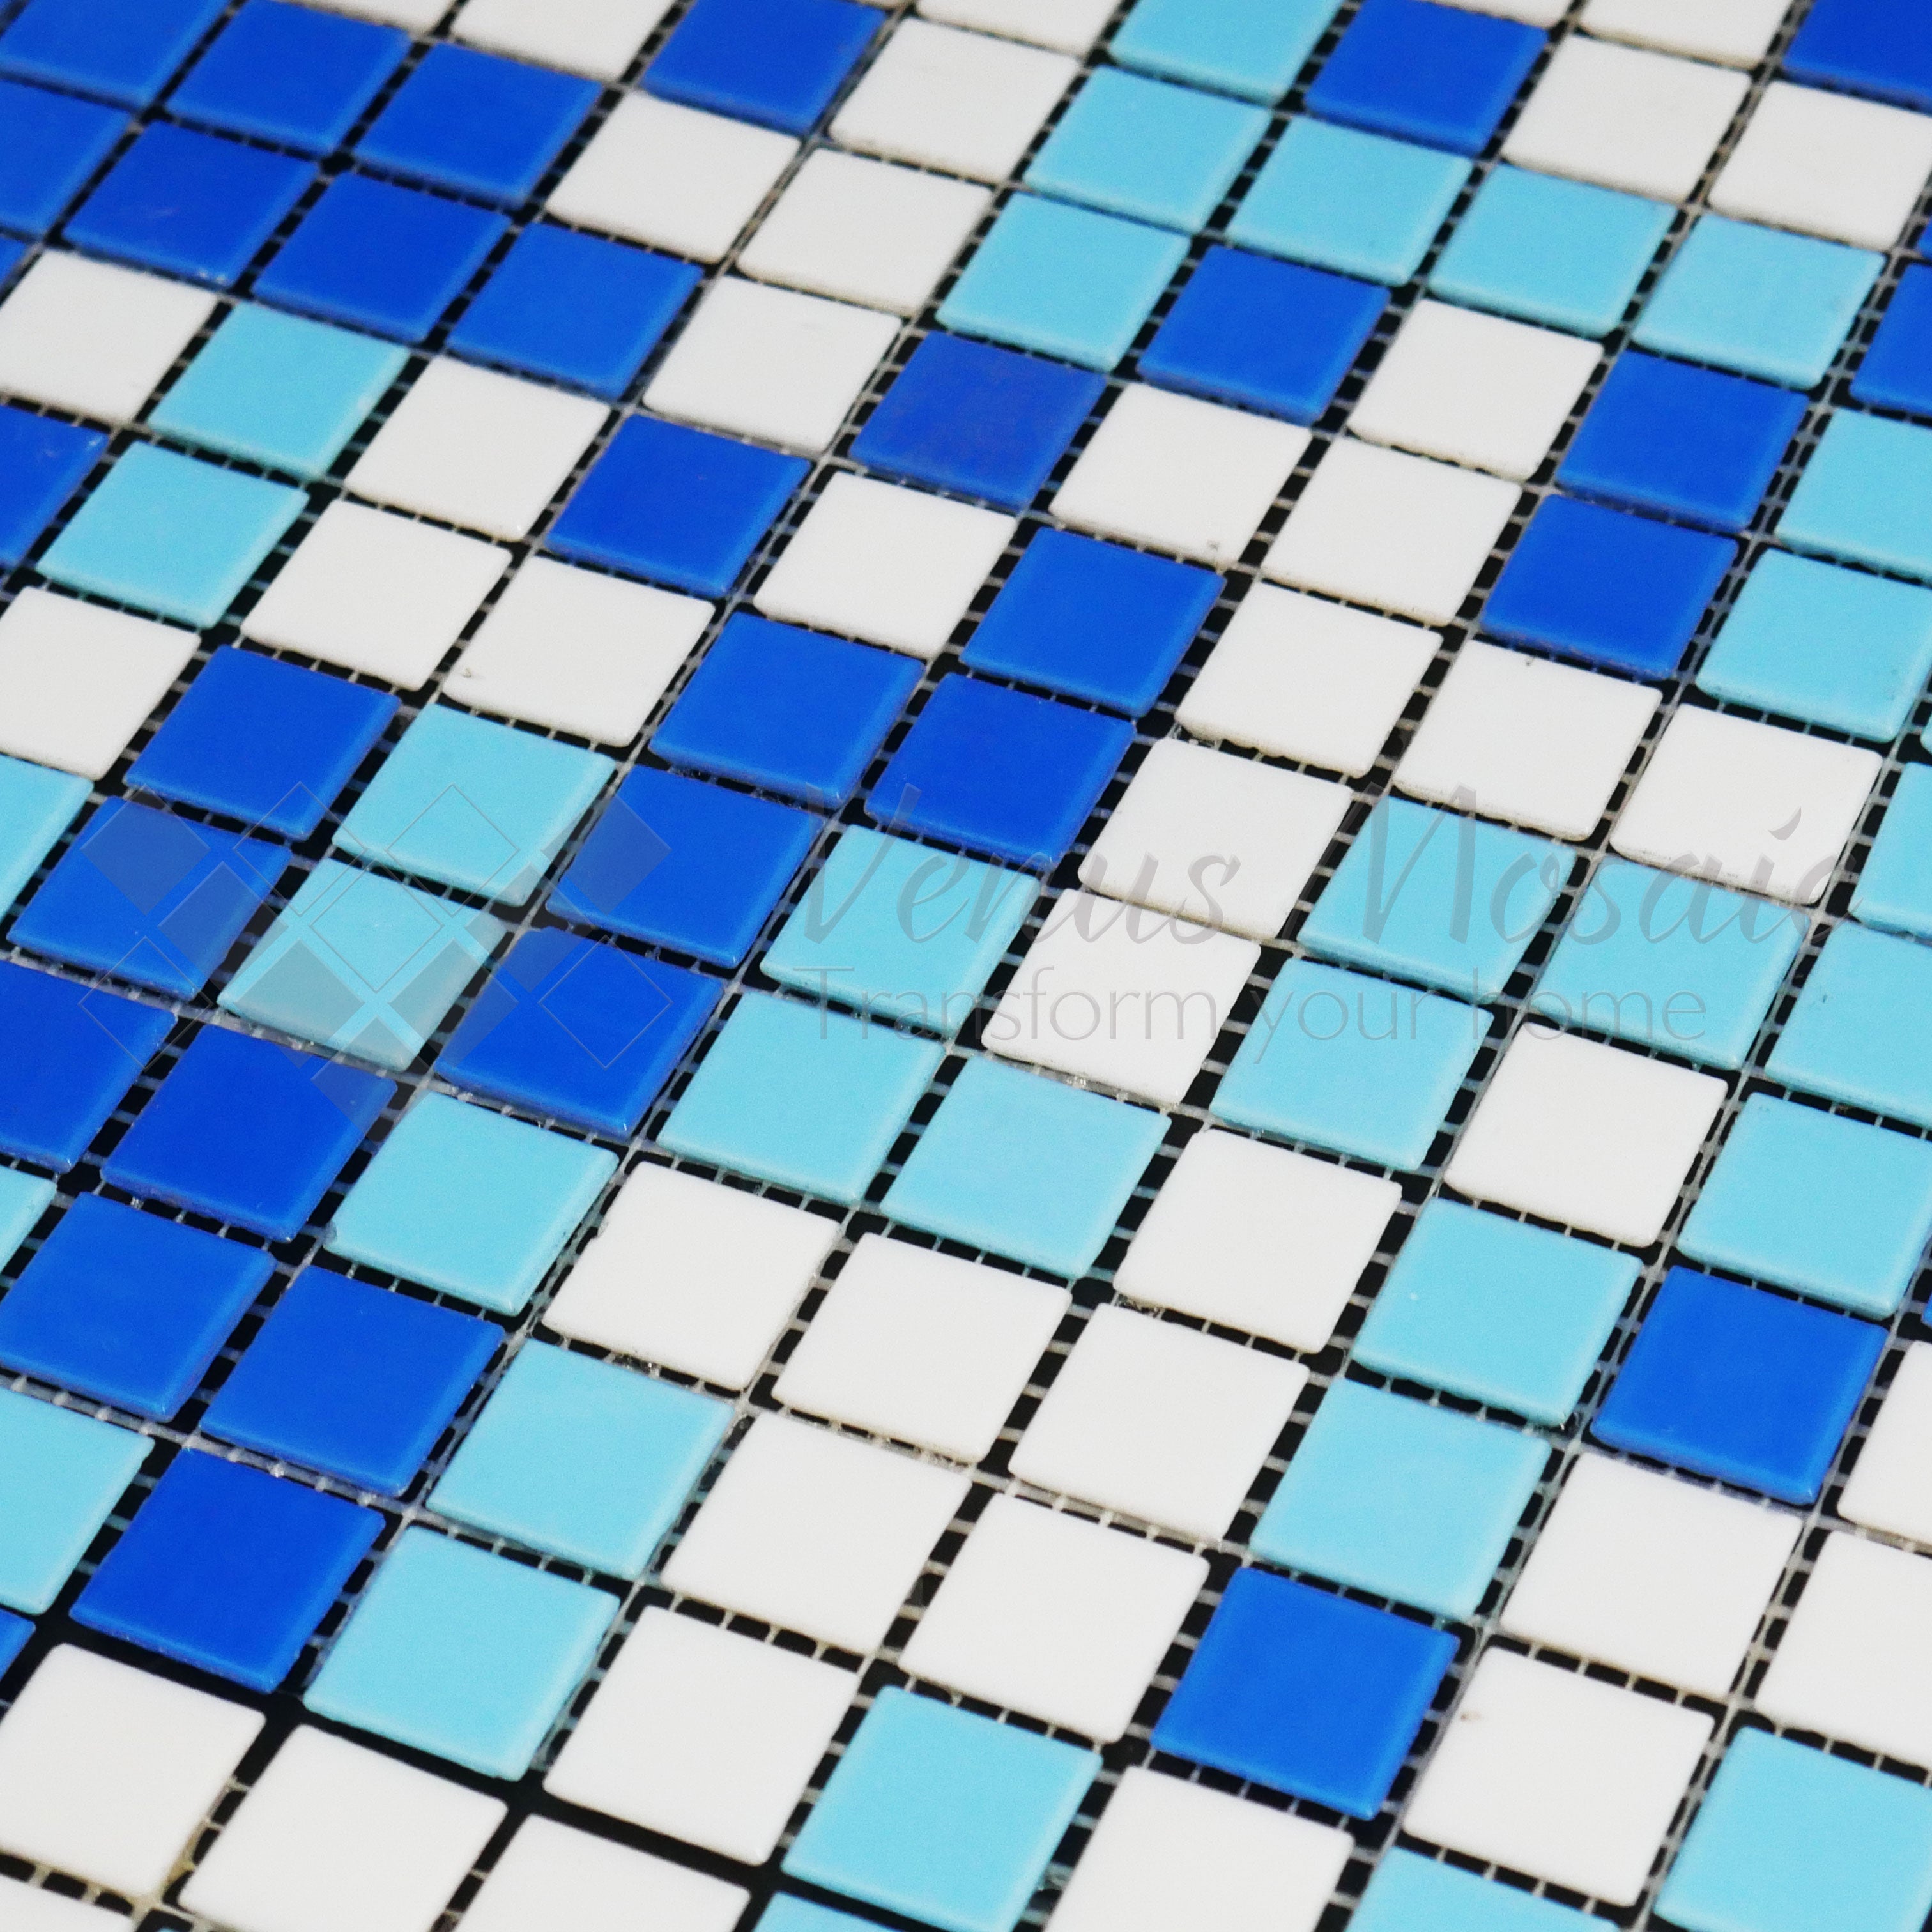 Venus Mosaic Glass Blue and White Pool Tile